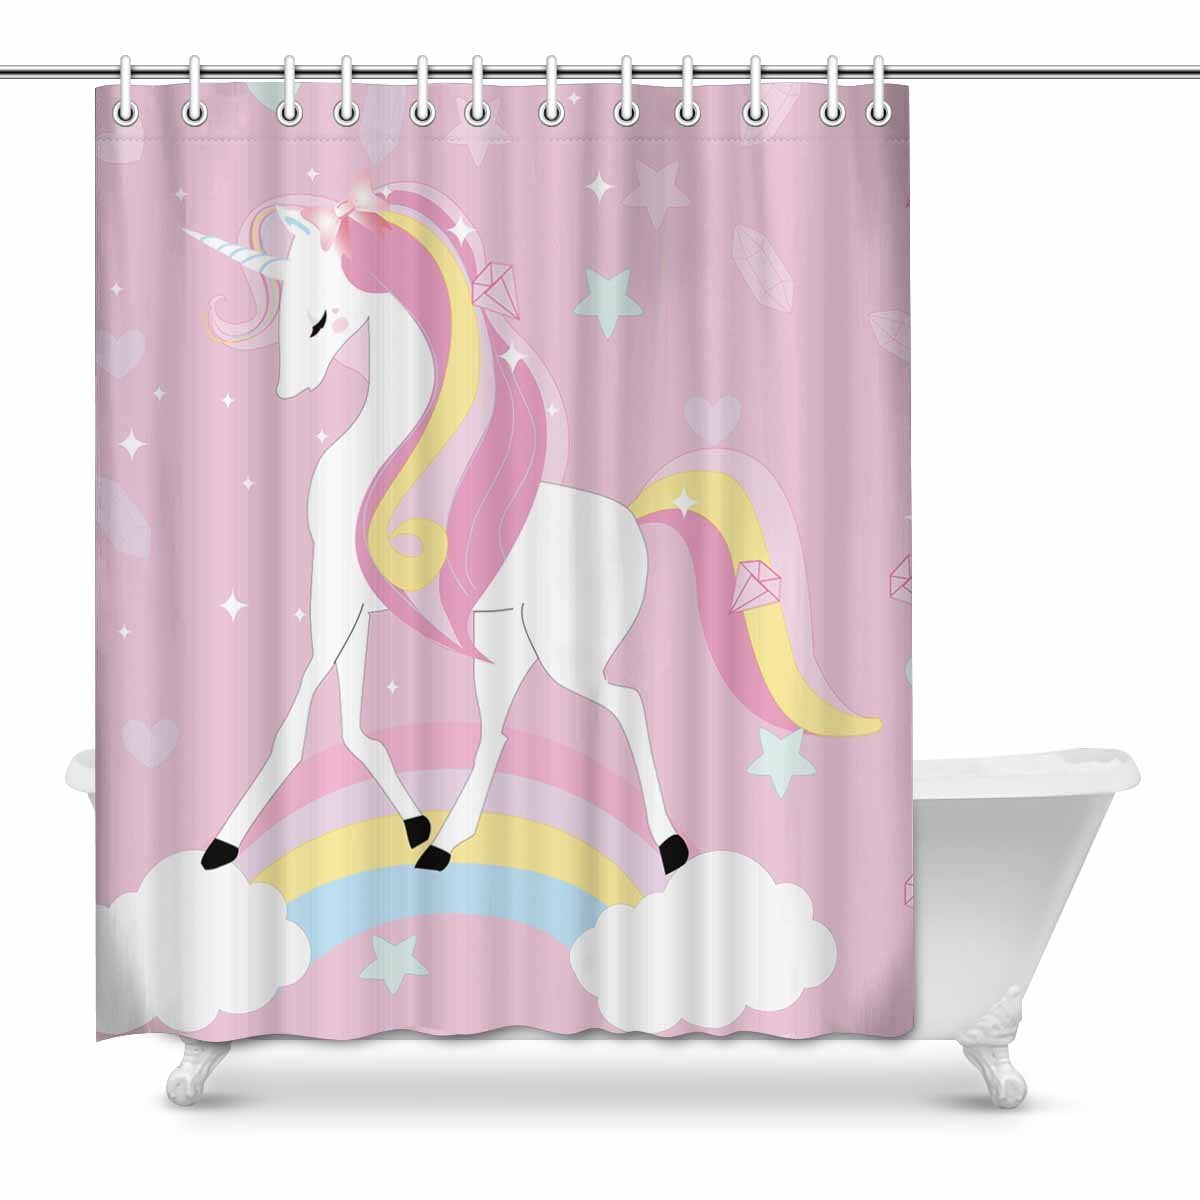 72" Cute Bird Pink Rabbit Shower Curtain Set Bathroom Waterproof Fabric Hooks 